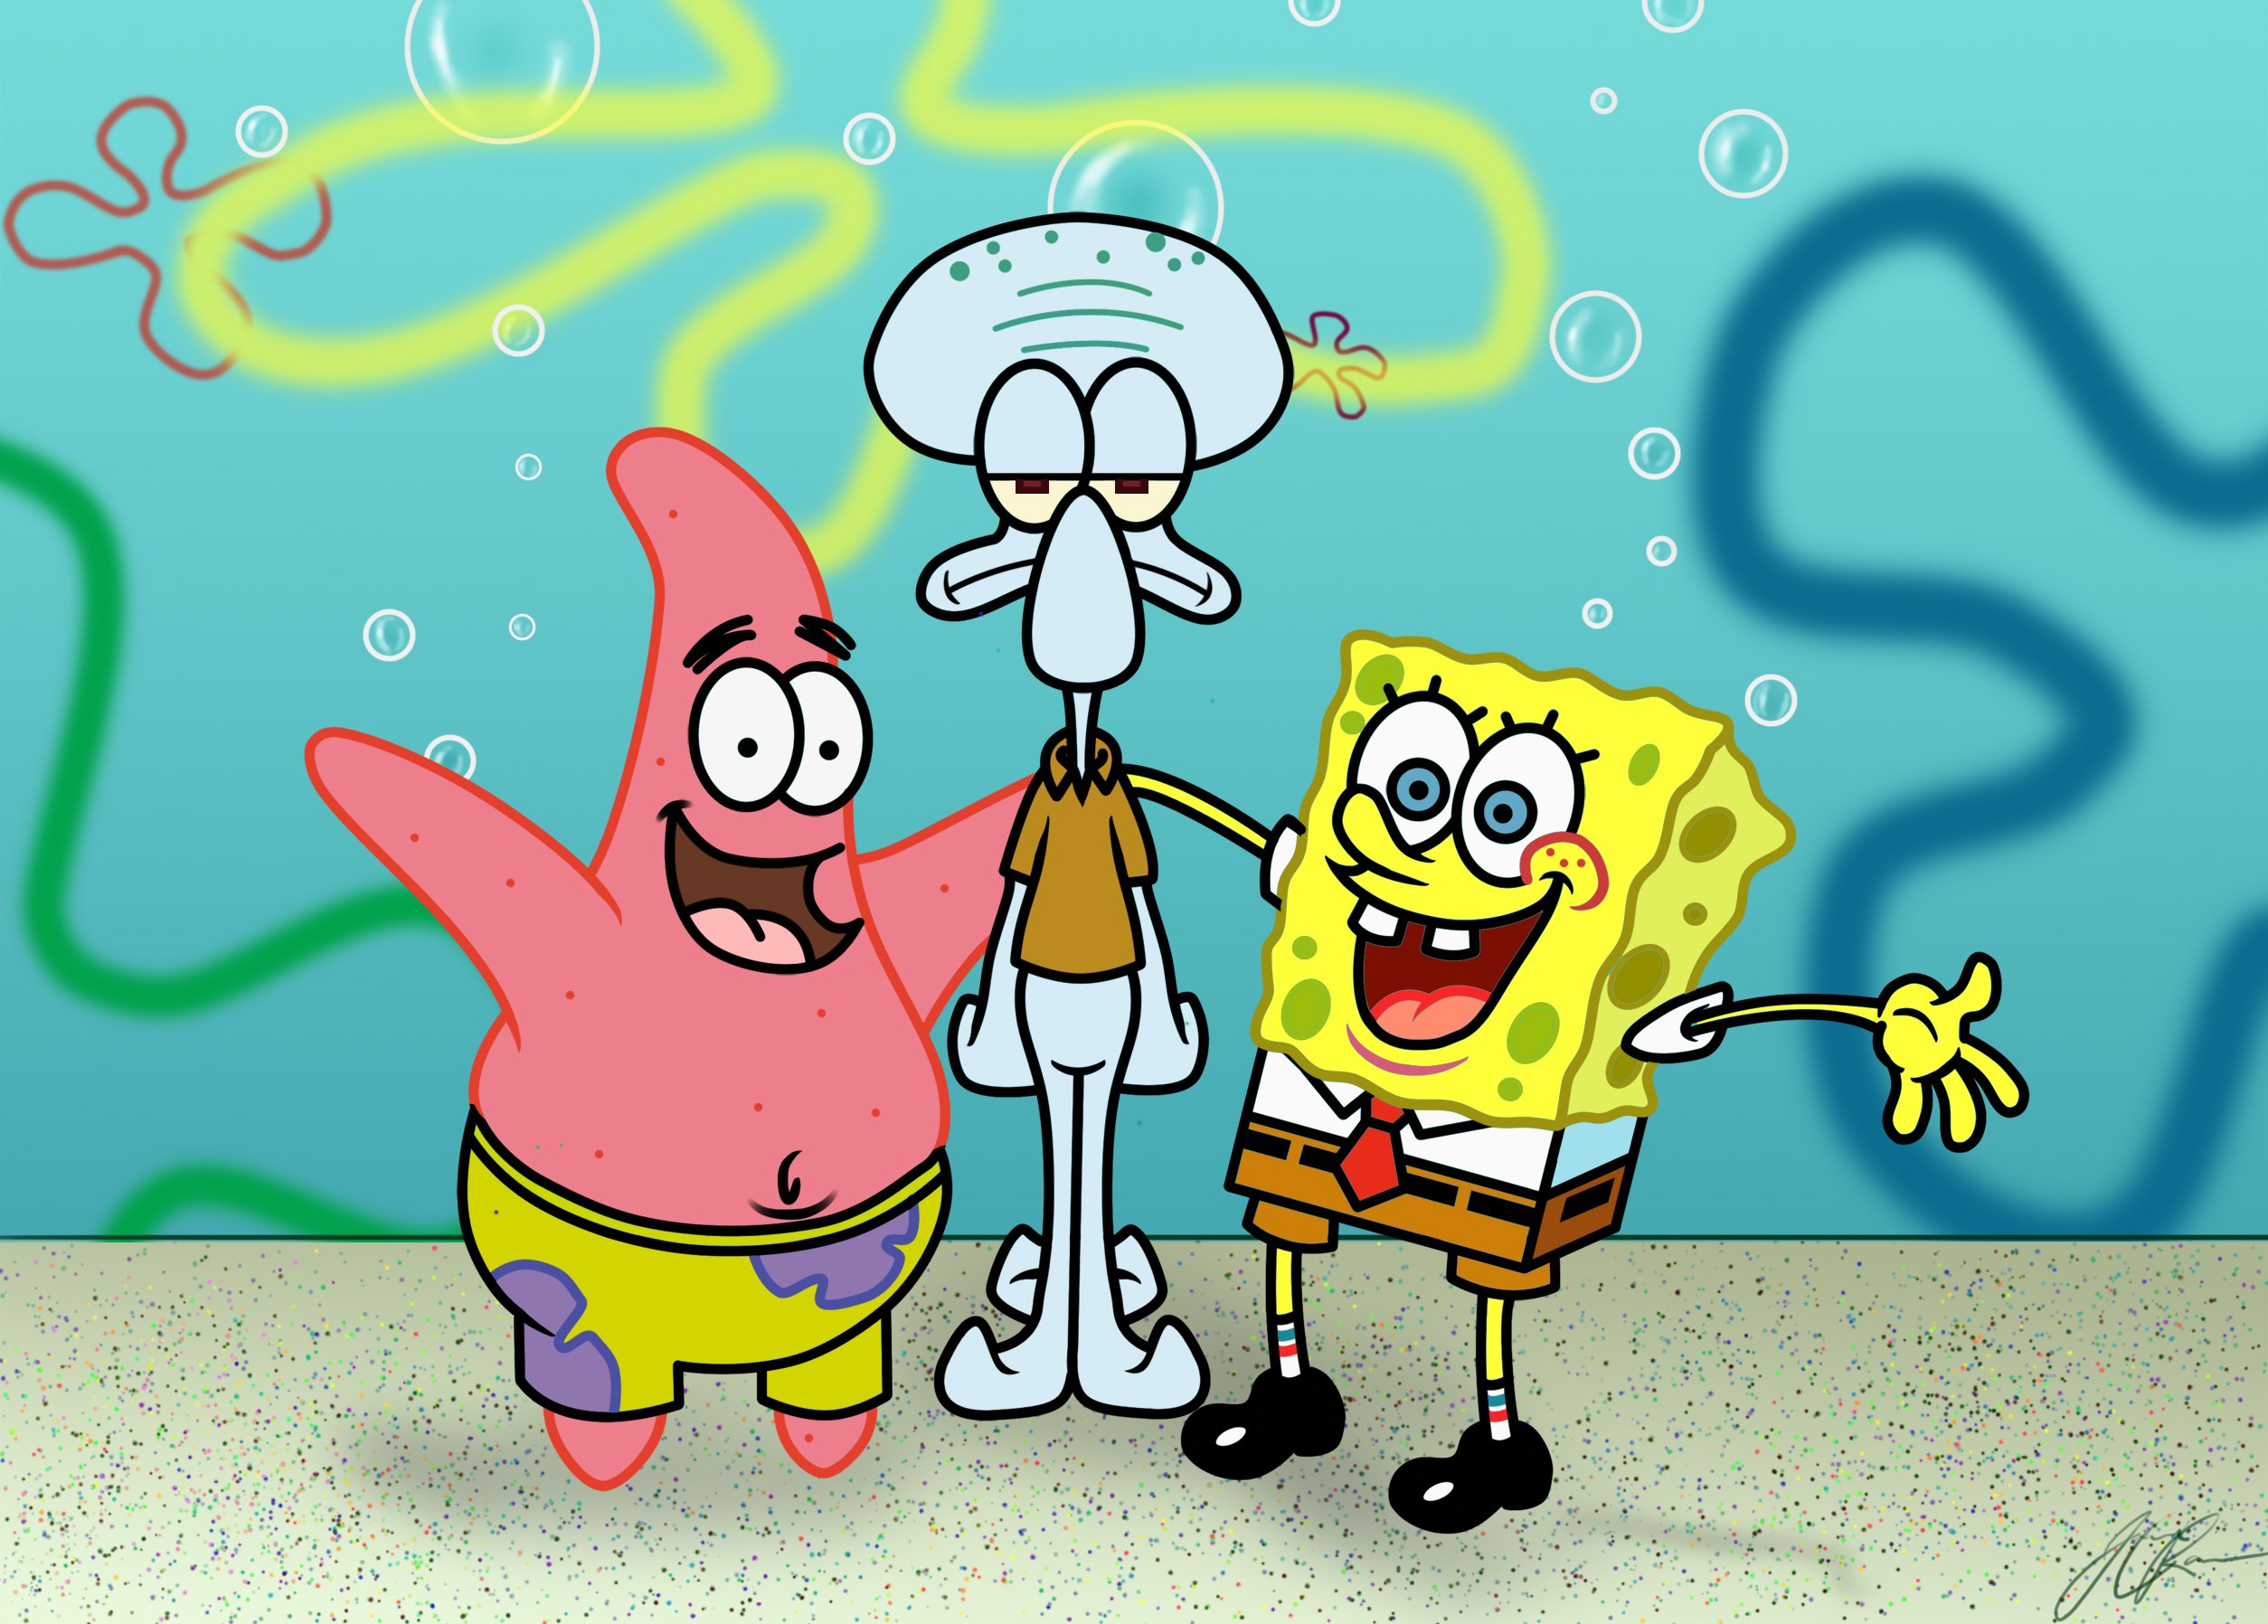 Spongebob Squarepants and Friends Background Image for MacBook